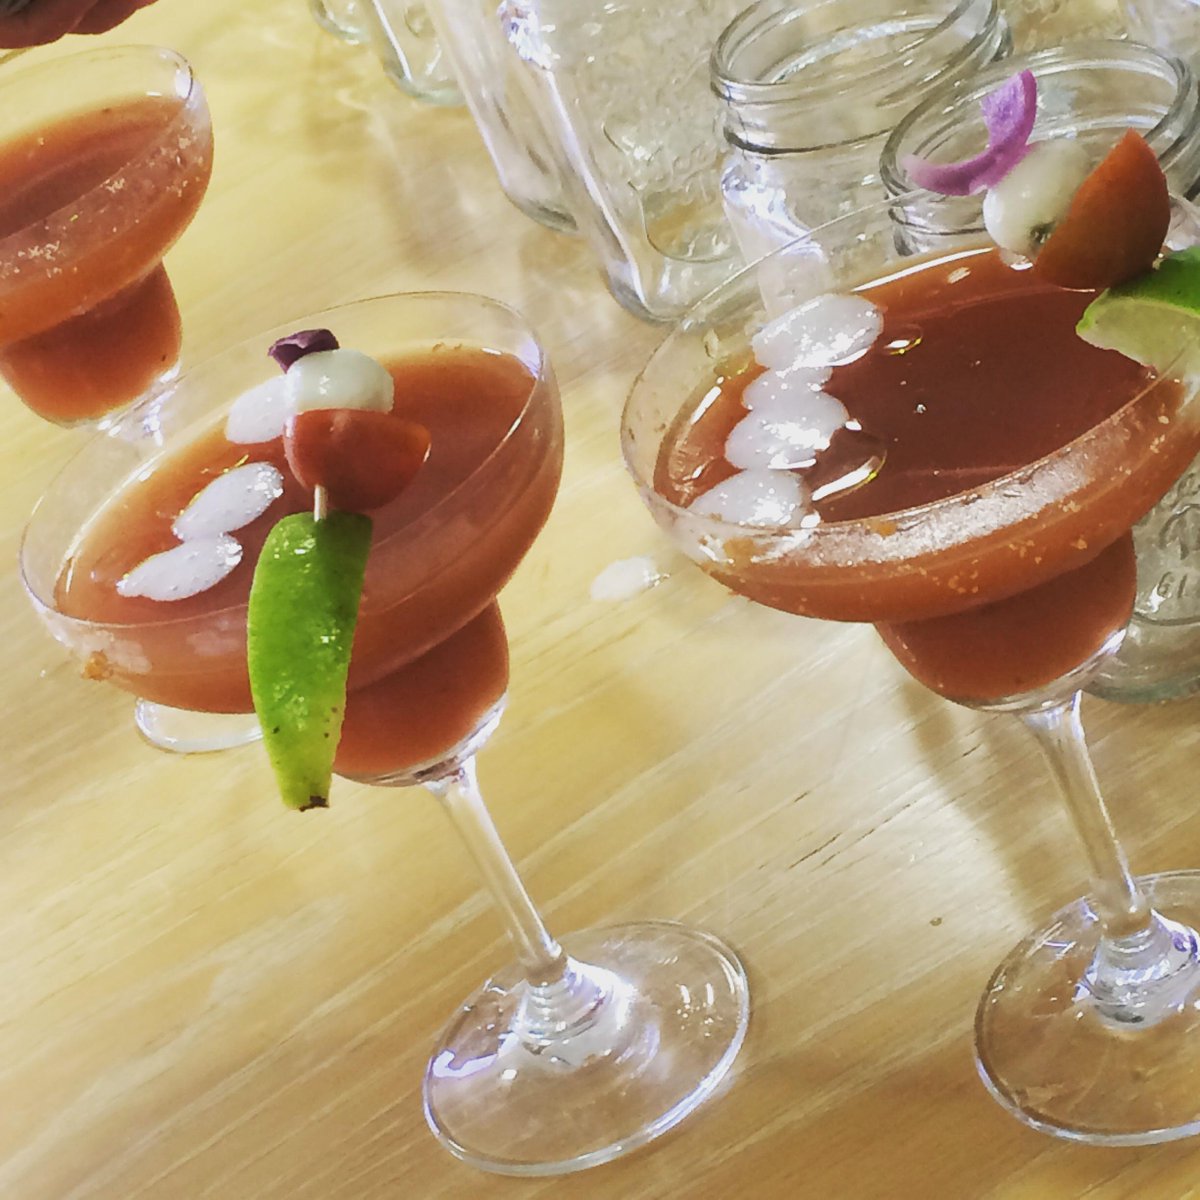 .@pizzahutuk are helping us celebrate #InternationalPinaColadaDay. Here's the H&J suggested 'Margherita Margarita'.